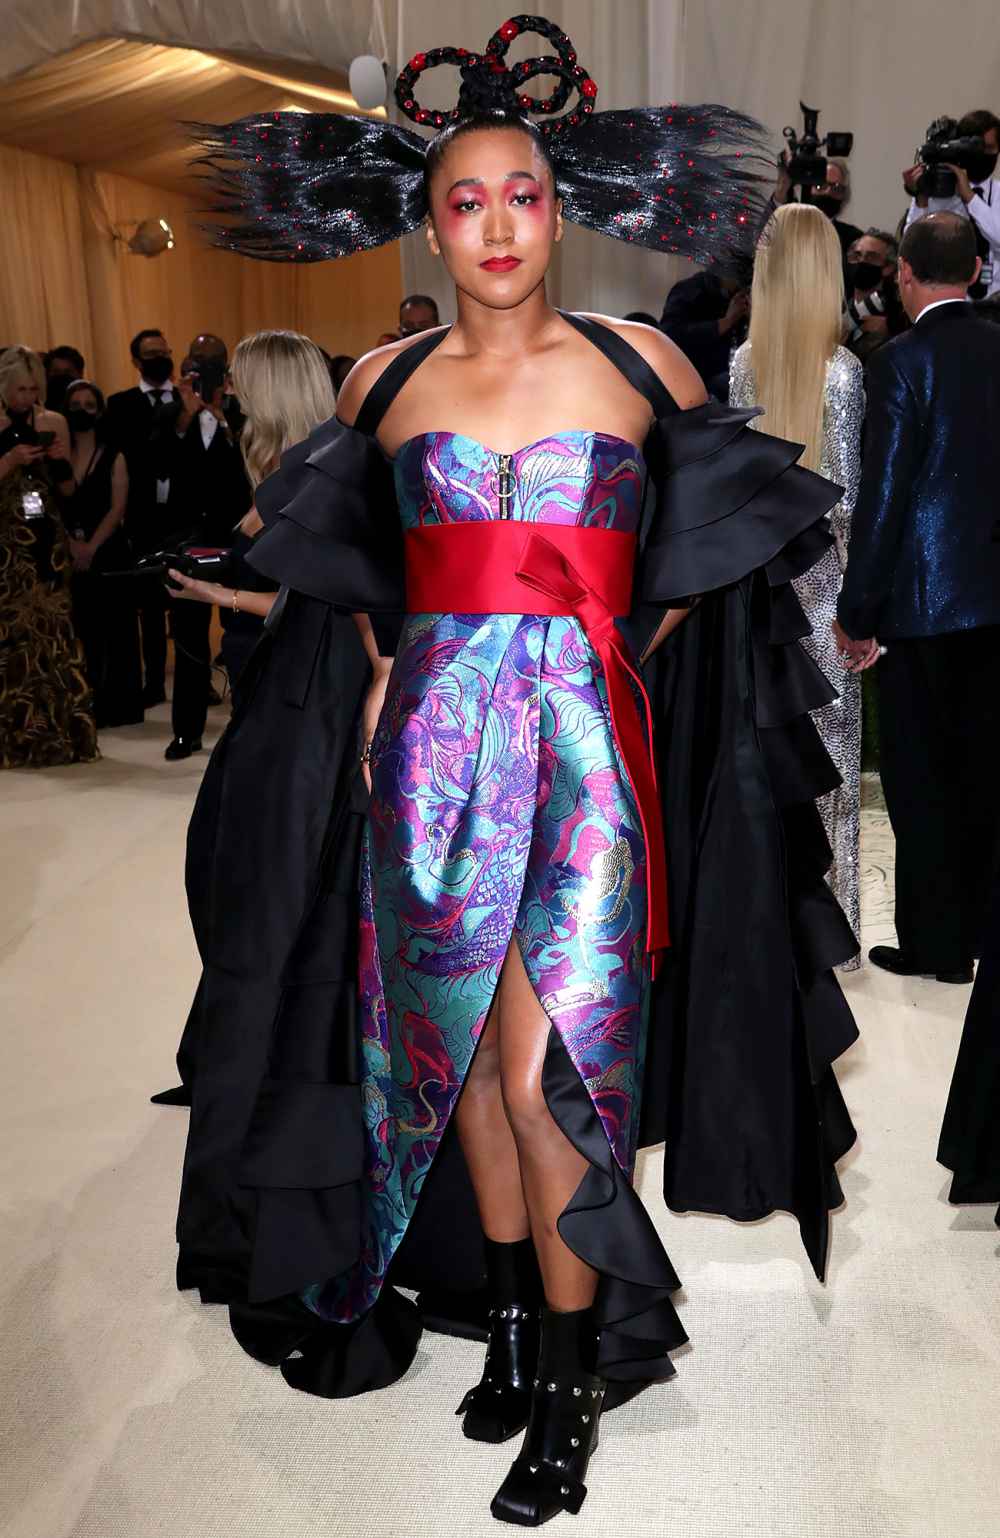 Met Gala 2021 Naomi Osaka Arrives at the Met Gala — and Her Look Has Us Speechless